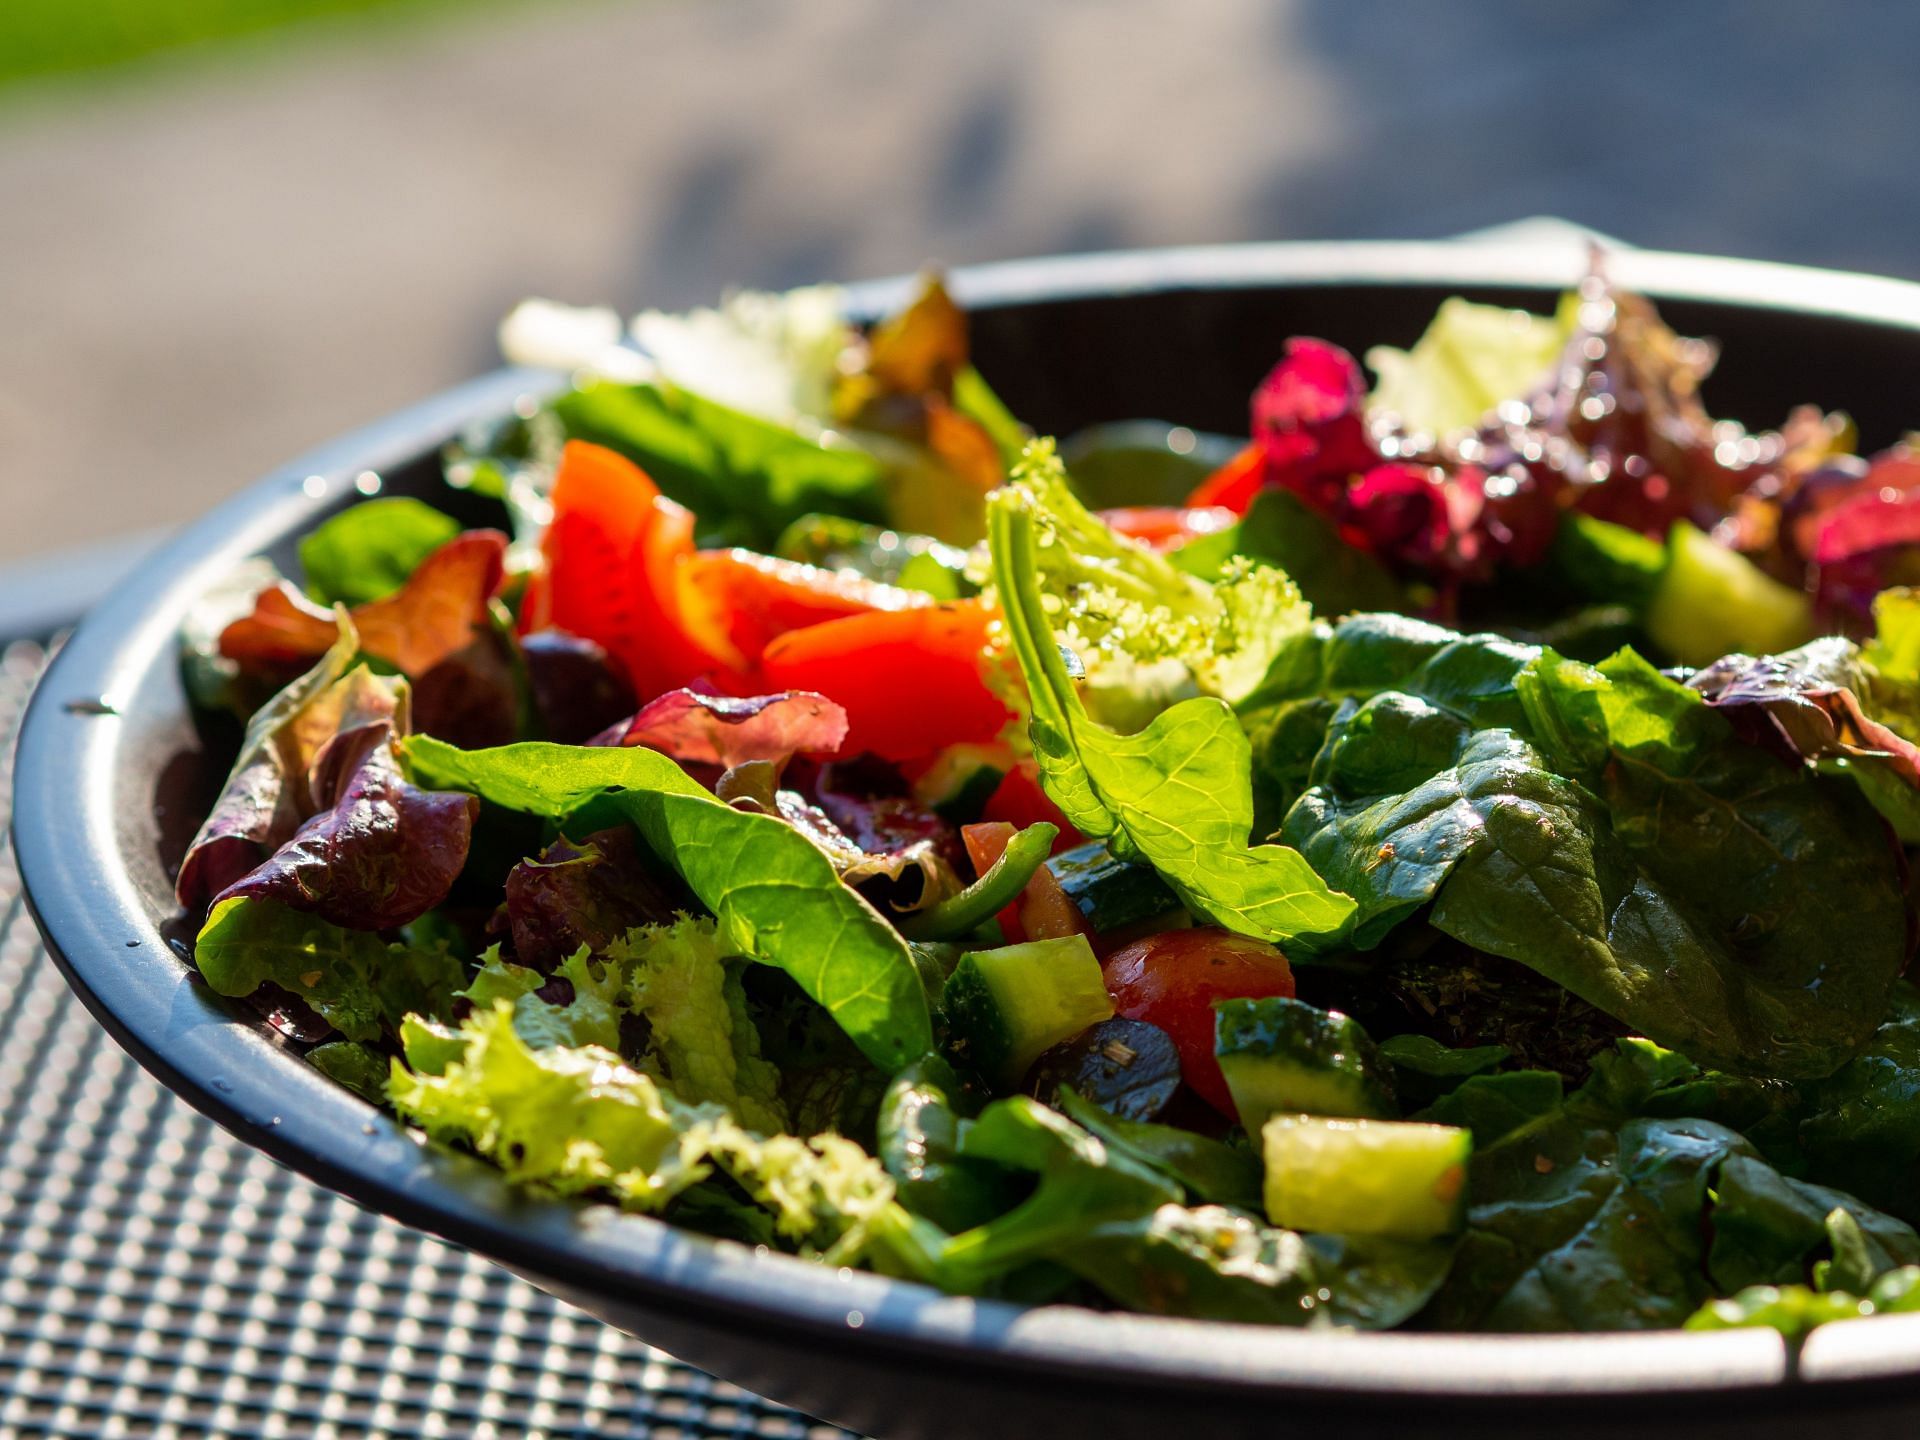 Benefits of kale: Helps you to lose weight. (Image via Unsplash / Jonathan Ybema)